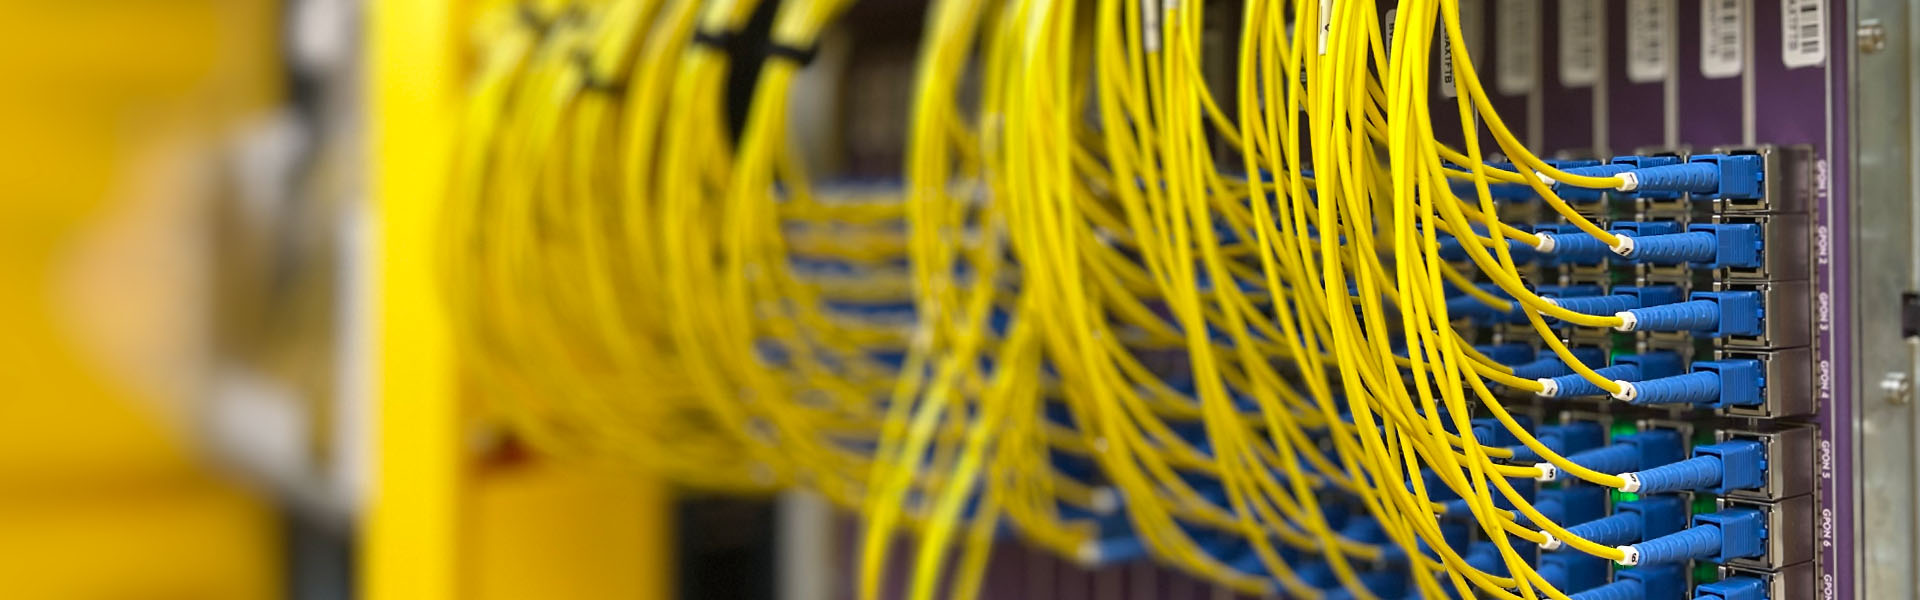 Ziply Fiber network cables